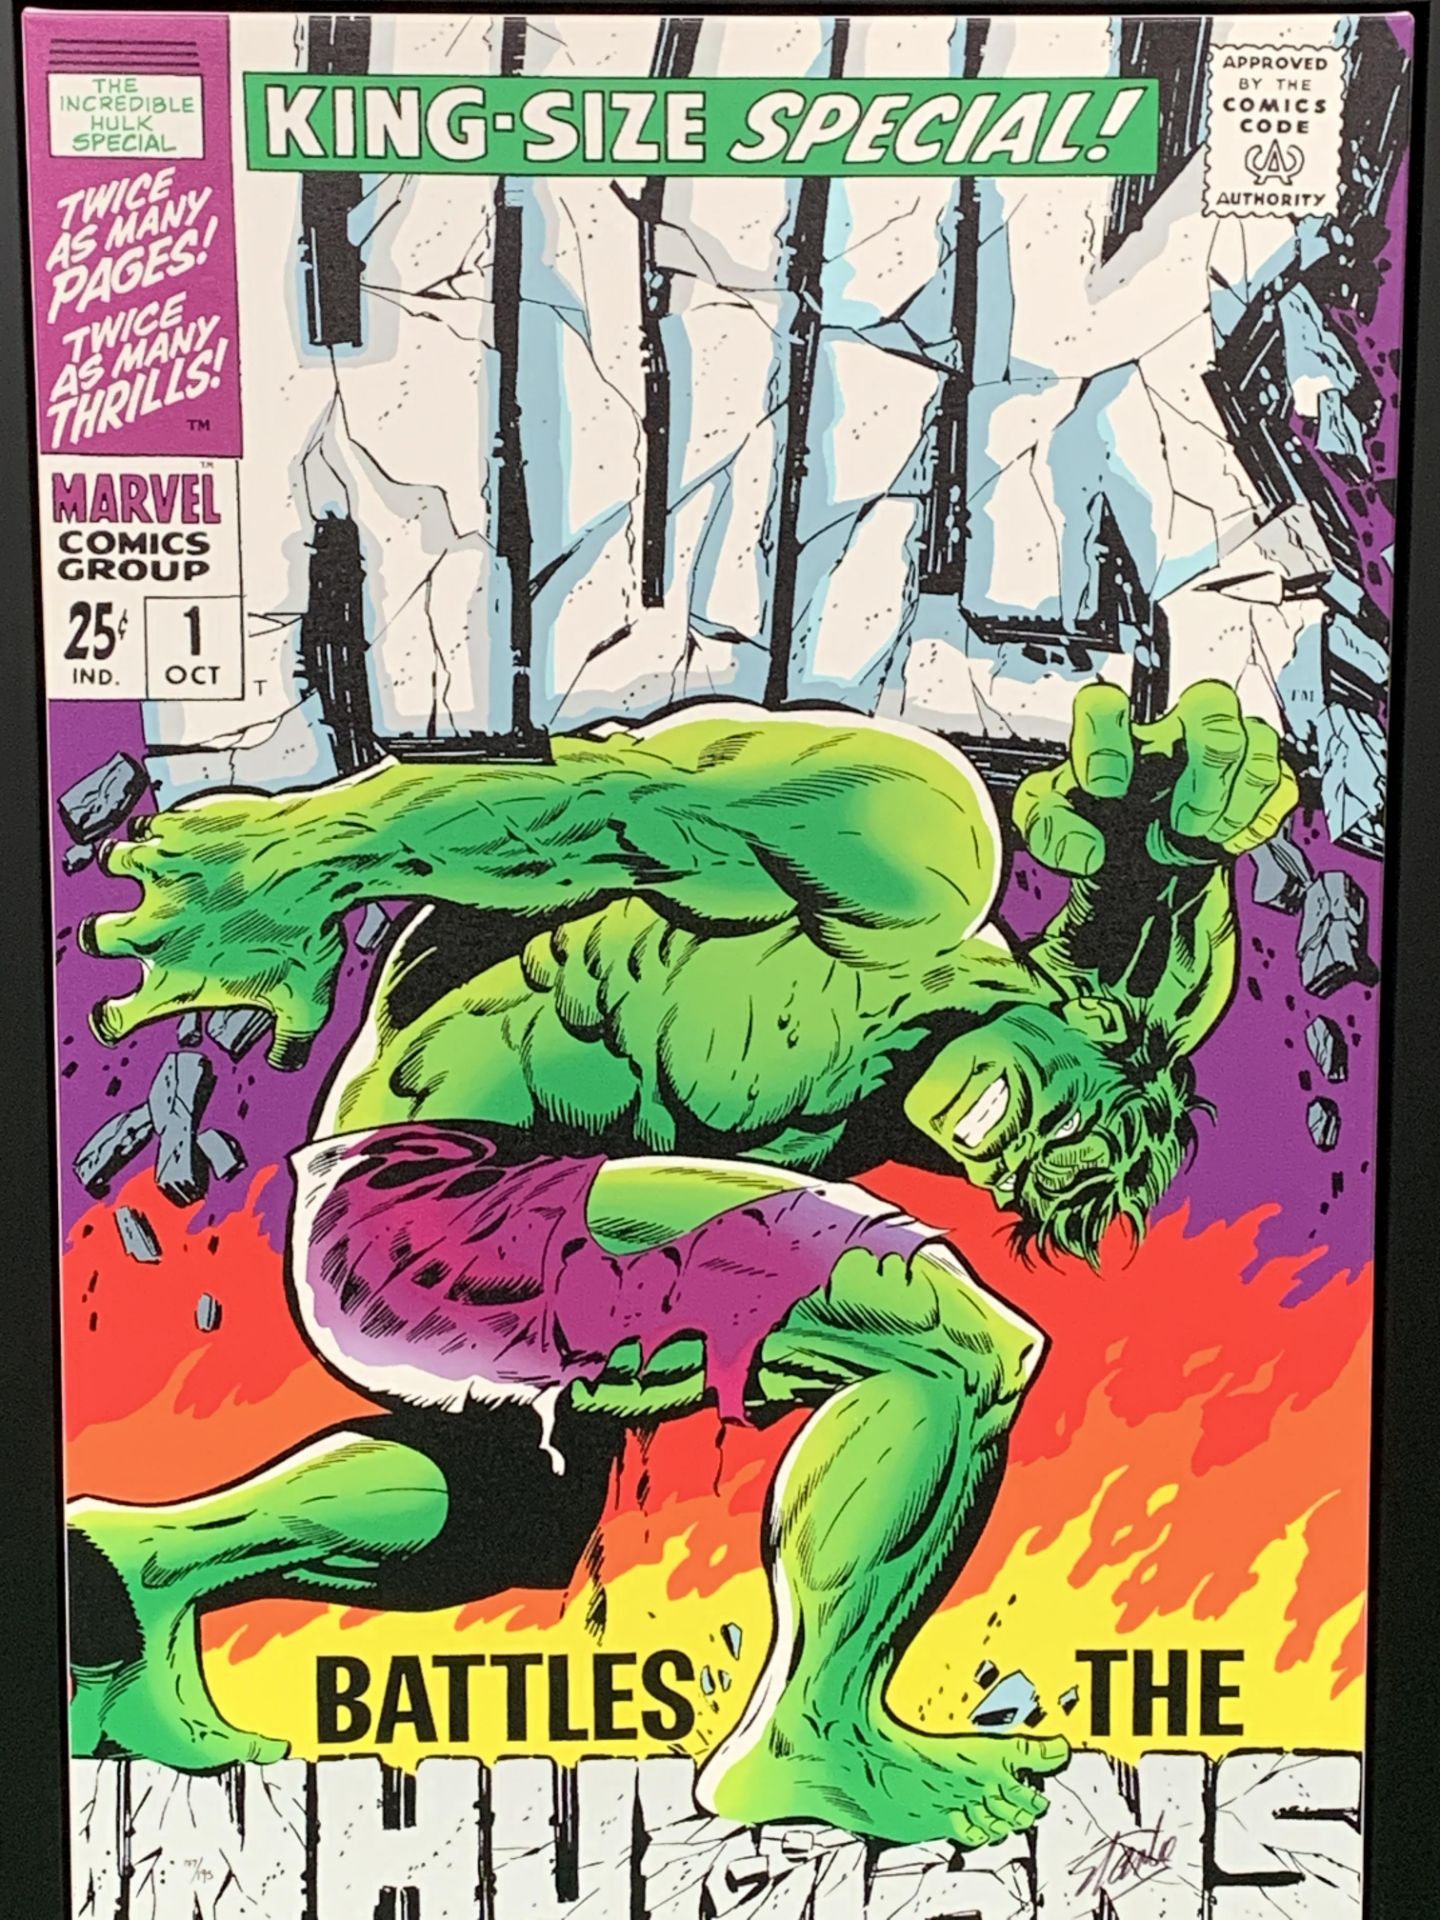 Washington Green Fine Art / Marvel CC Fine Art Marvel Superheroes Incredible Hulk Special #1